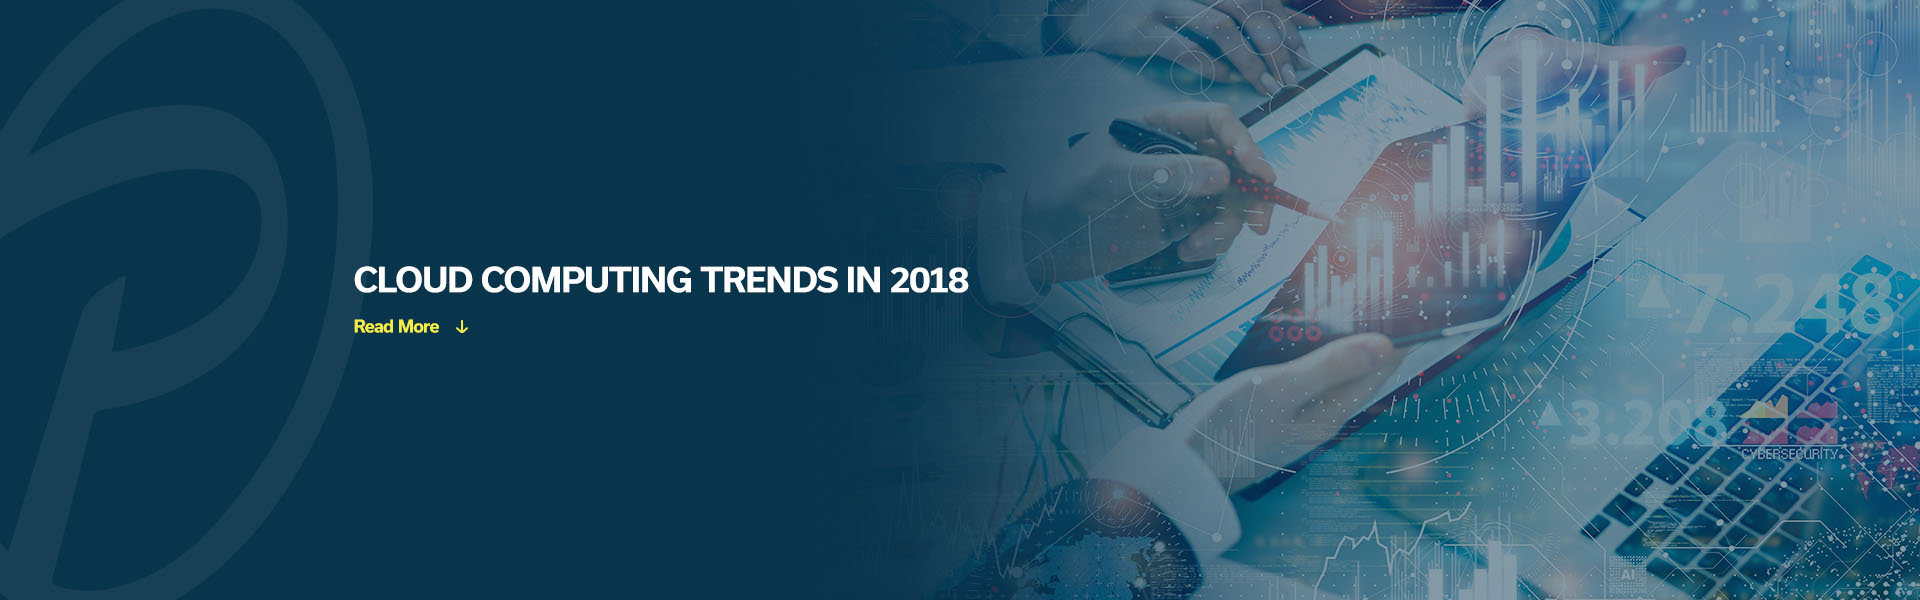 011-cloud-computing-trends-in-2018